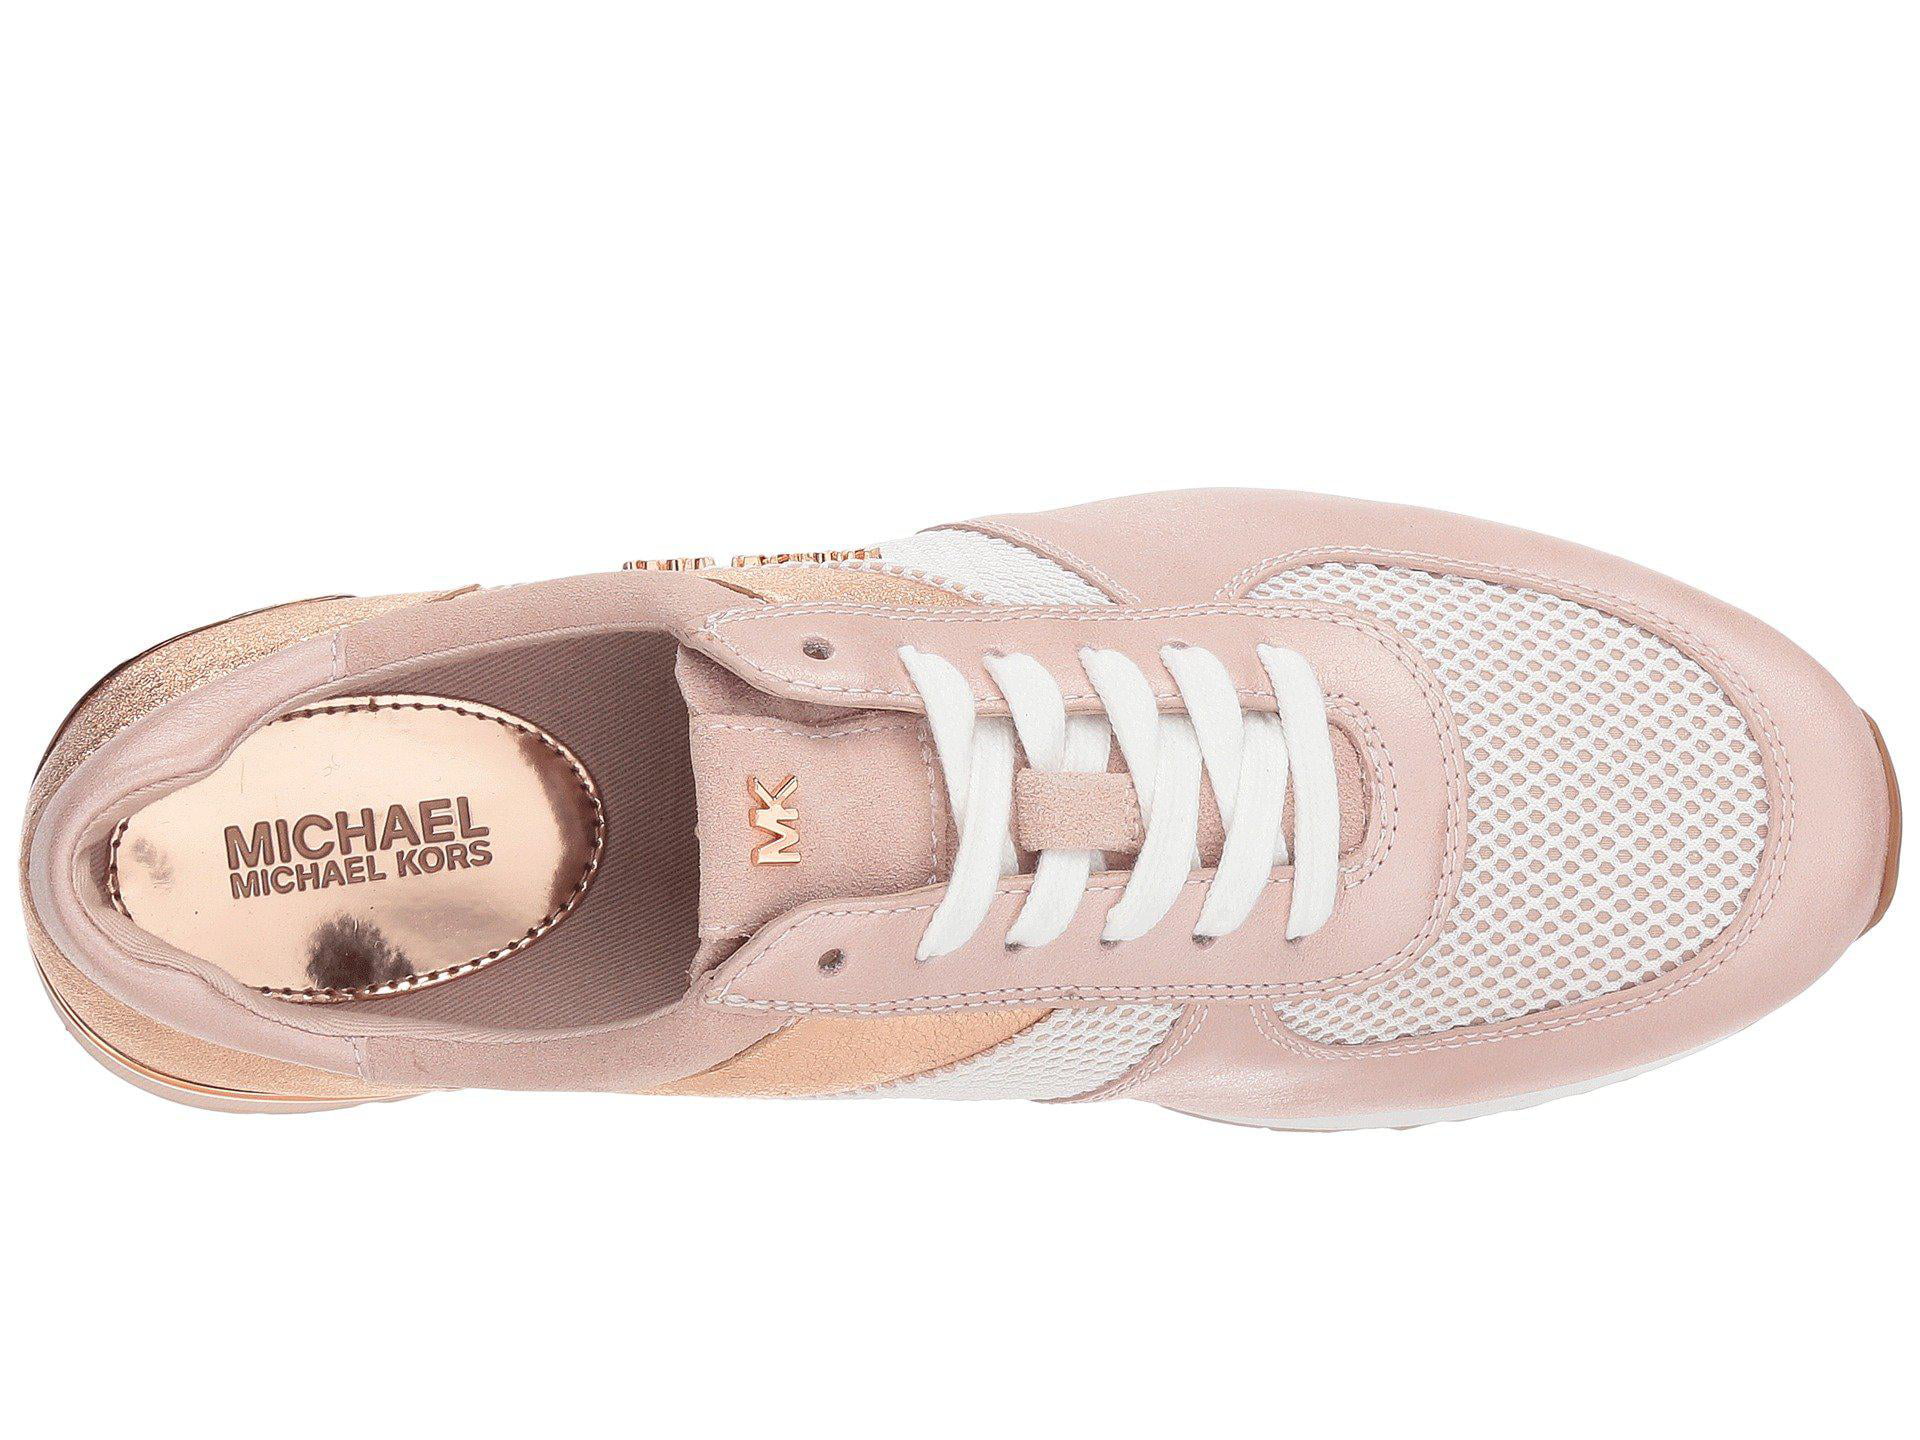 michael kors soft pink shoes